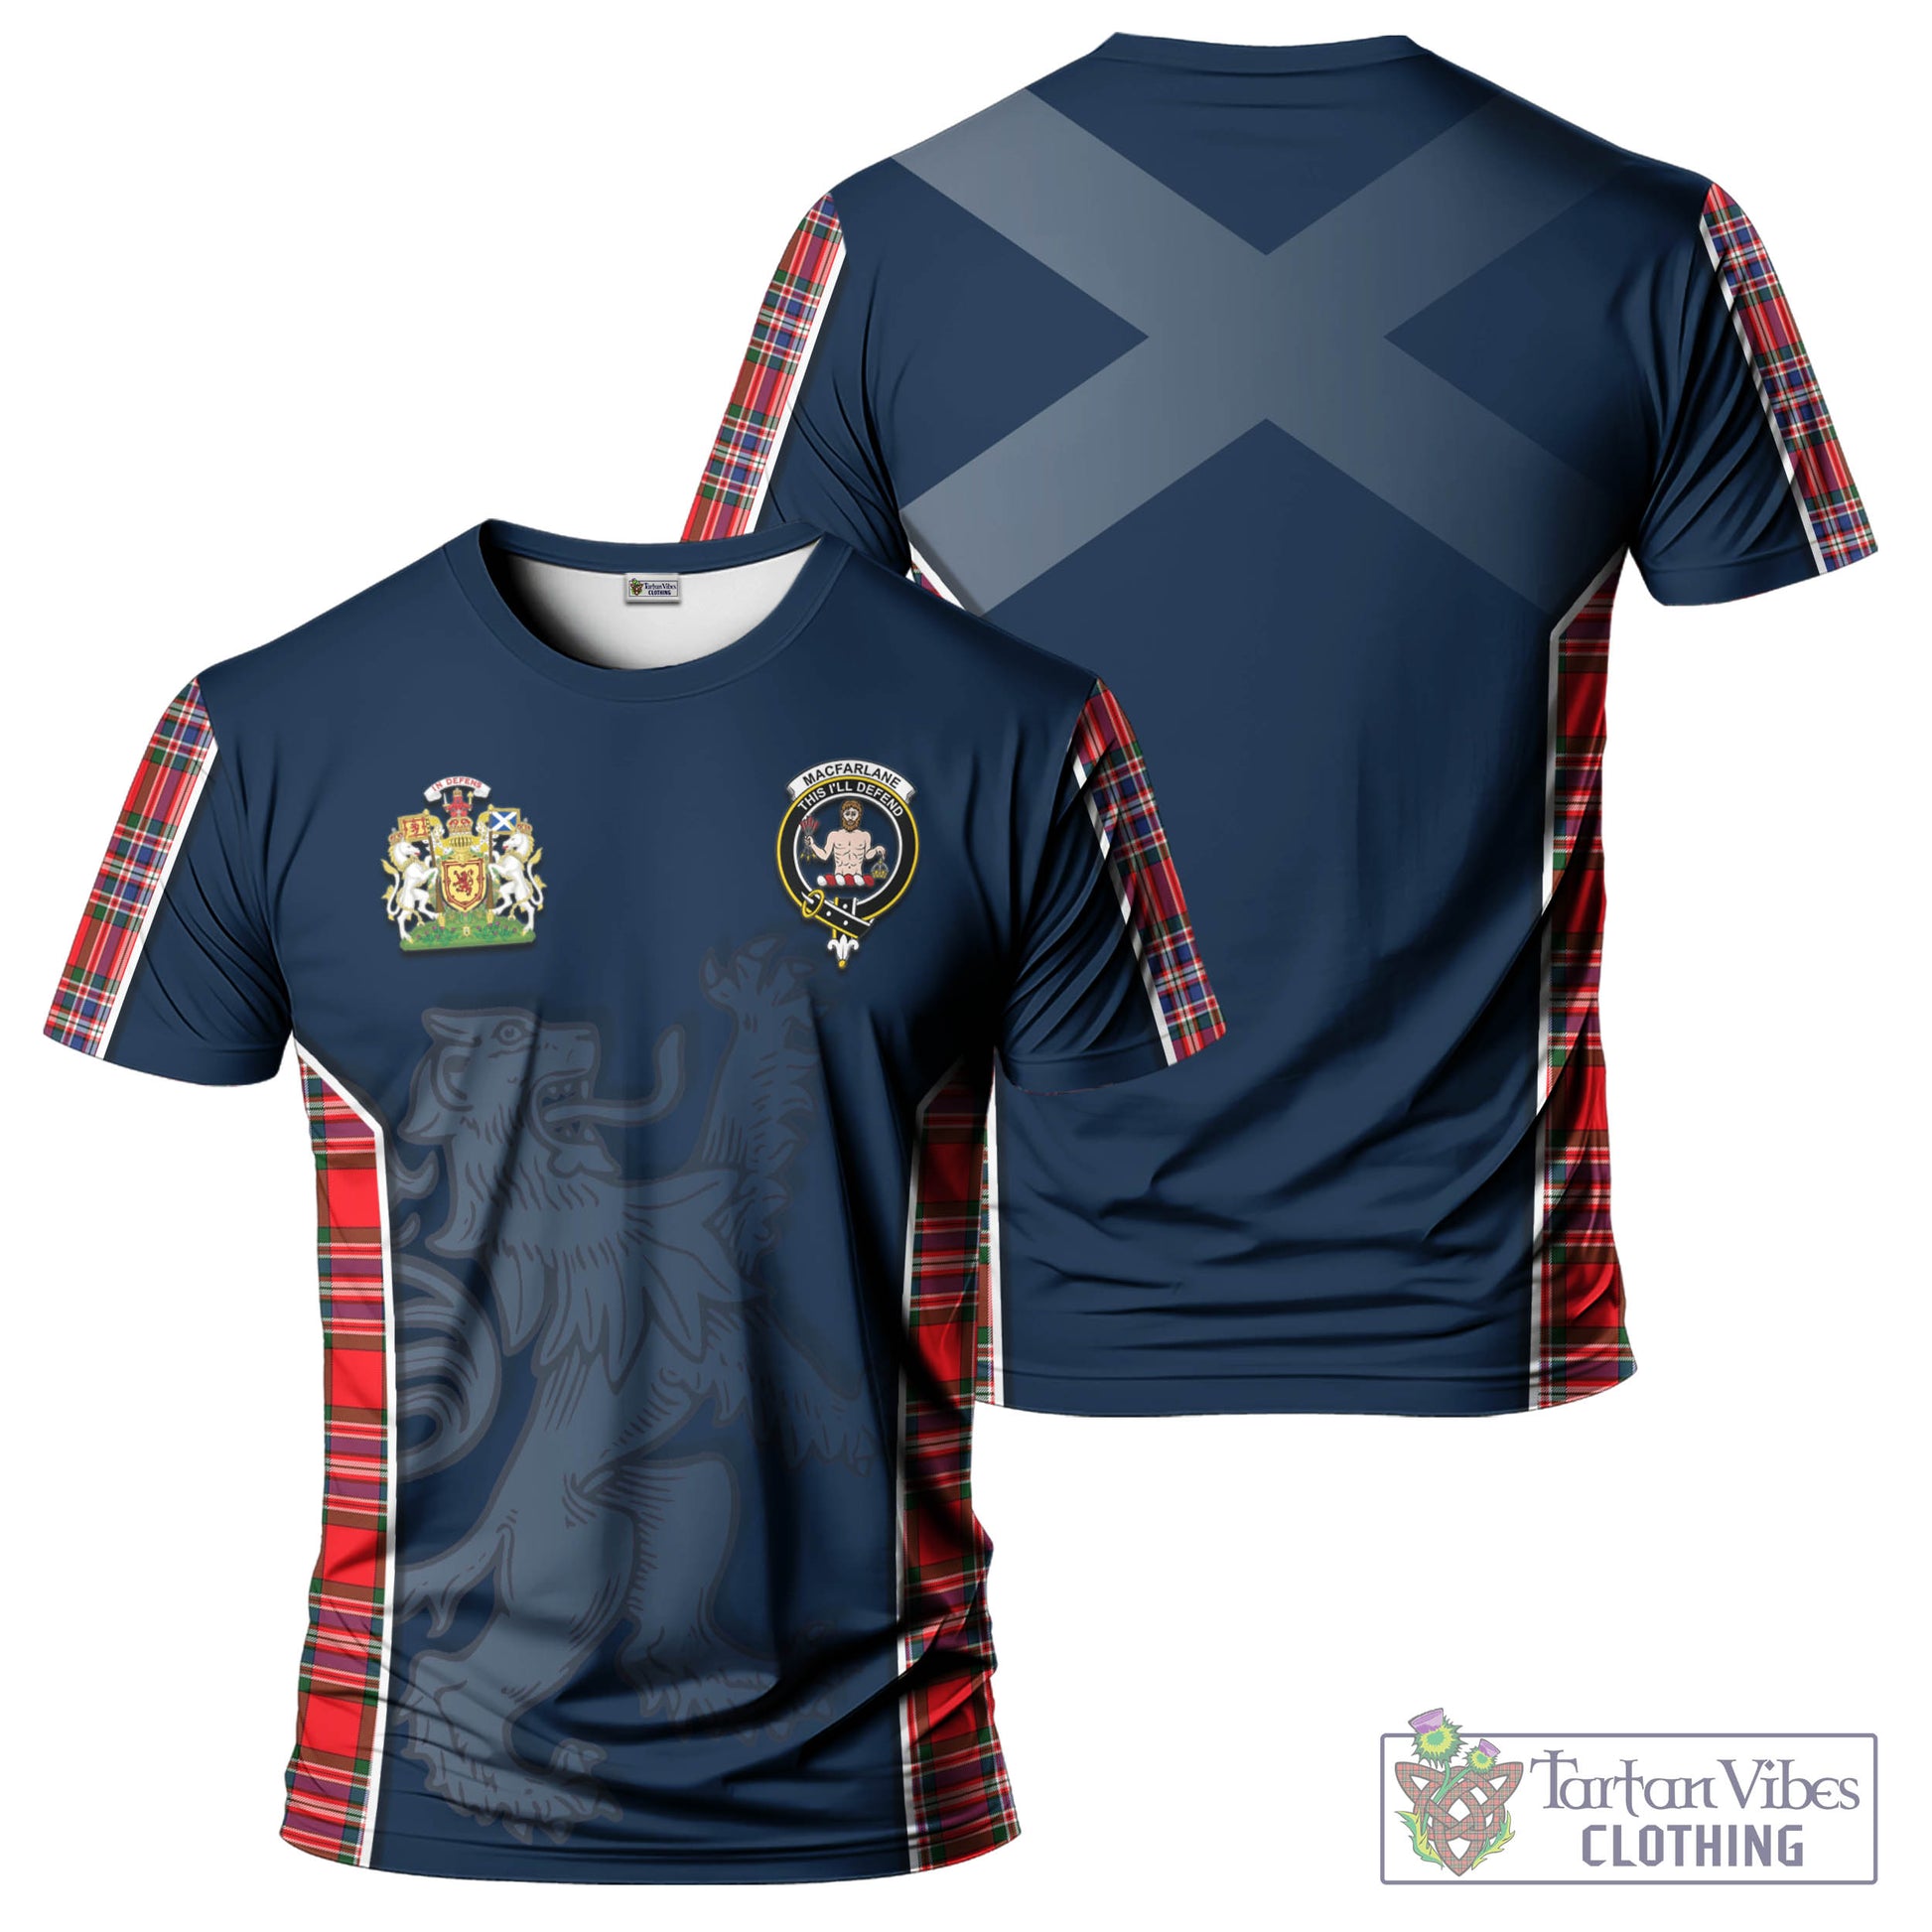 Tartan Vibes Clothing MacFarlane Modern Tartan T-Shirt with Family Crest and Lion Rampant Vibes Sport Style